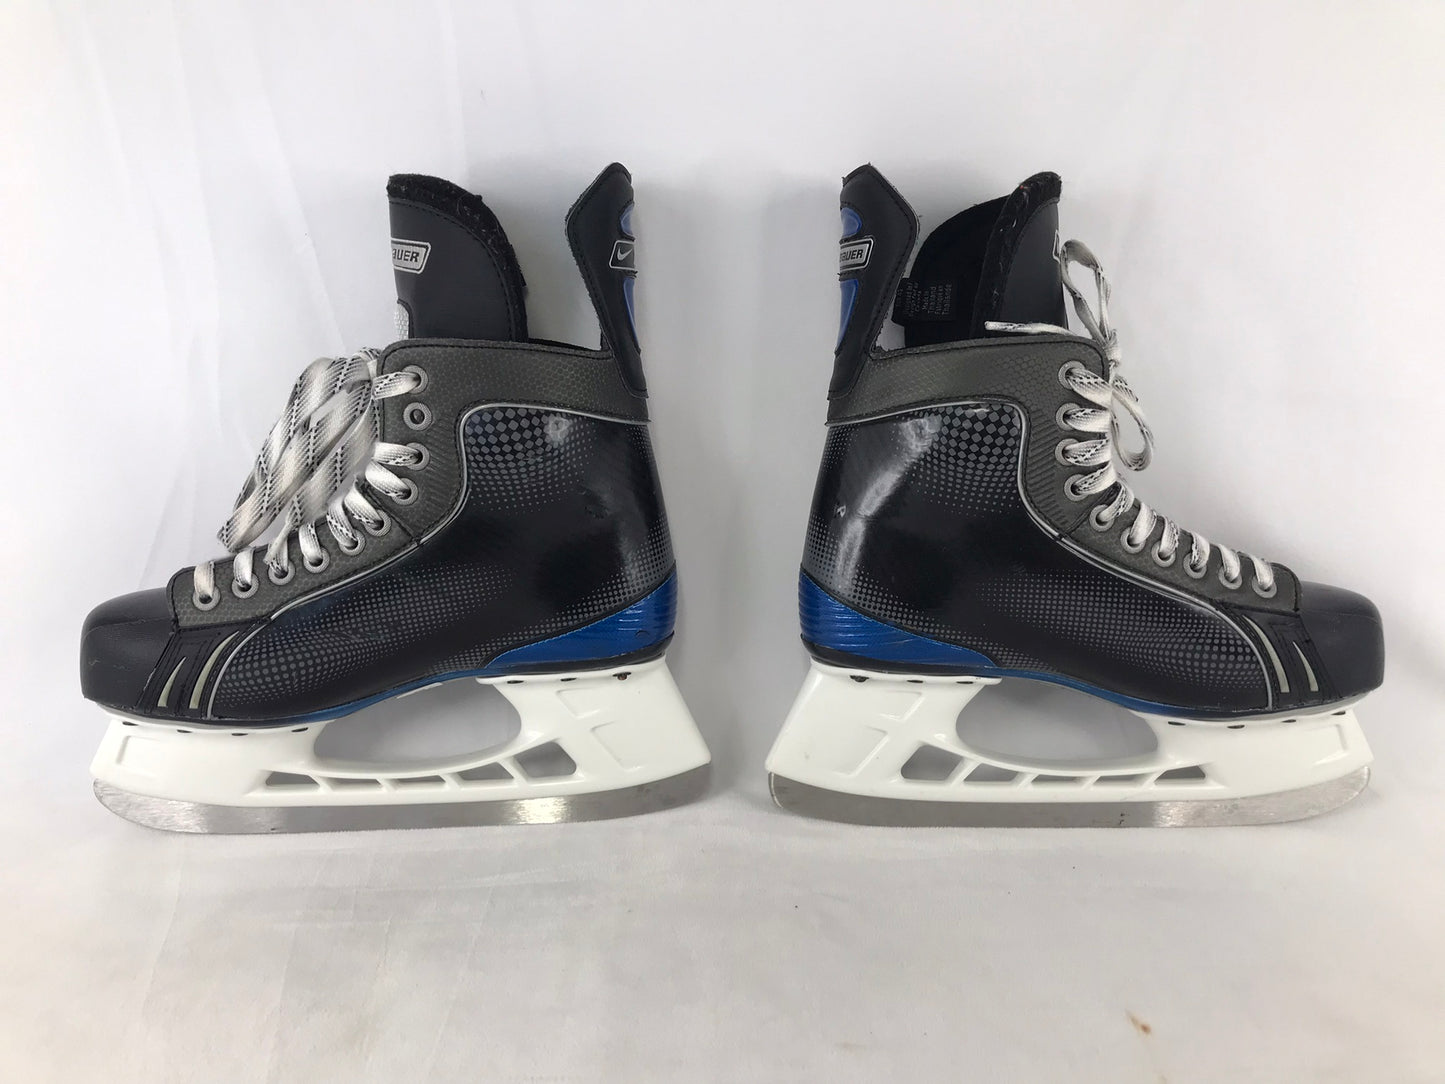 Hockey Skates Men's Size 8.5 Shoe Size Bauer Supreme One35 Excellent